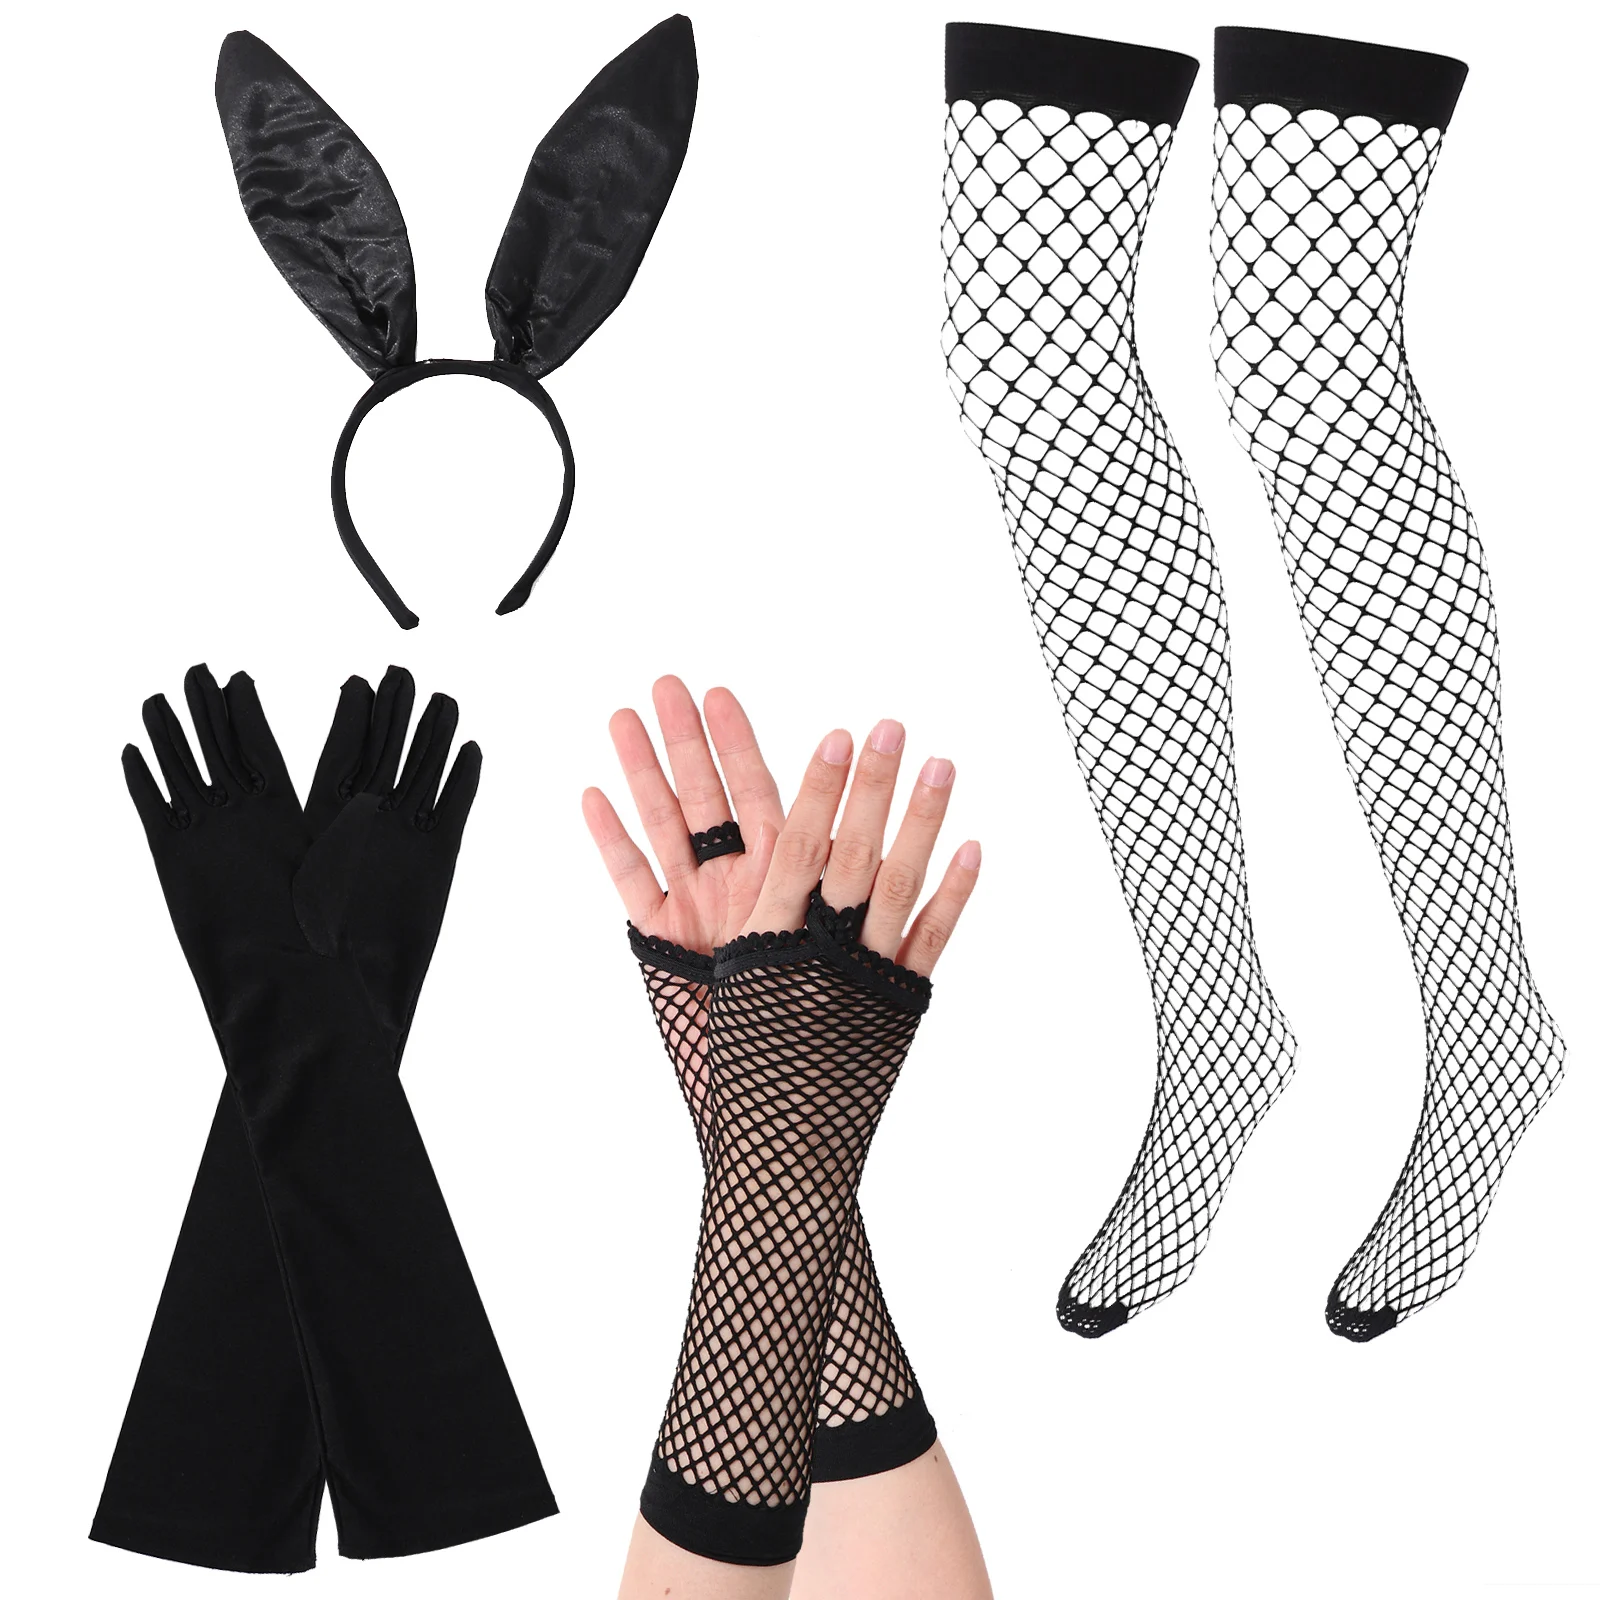 

30Sexy Bunny Costumes Halloween Cosplay Rabbit girls Party Fancy Dress Sexy Nightclub Clubwear Rabbit Girls Uniform Accessories